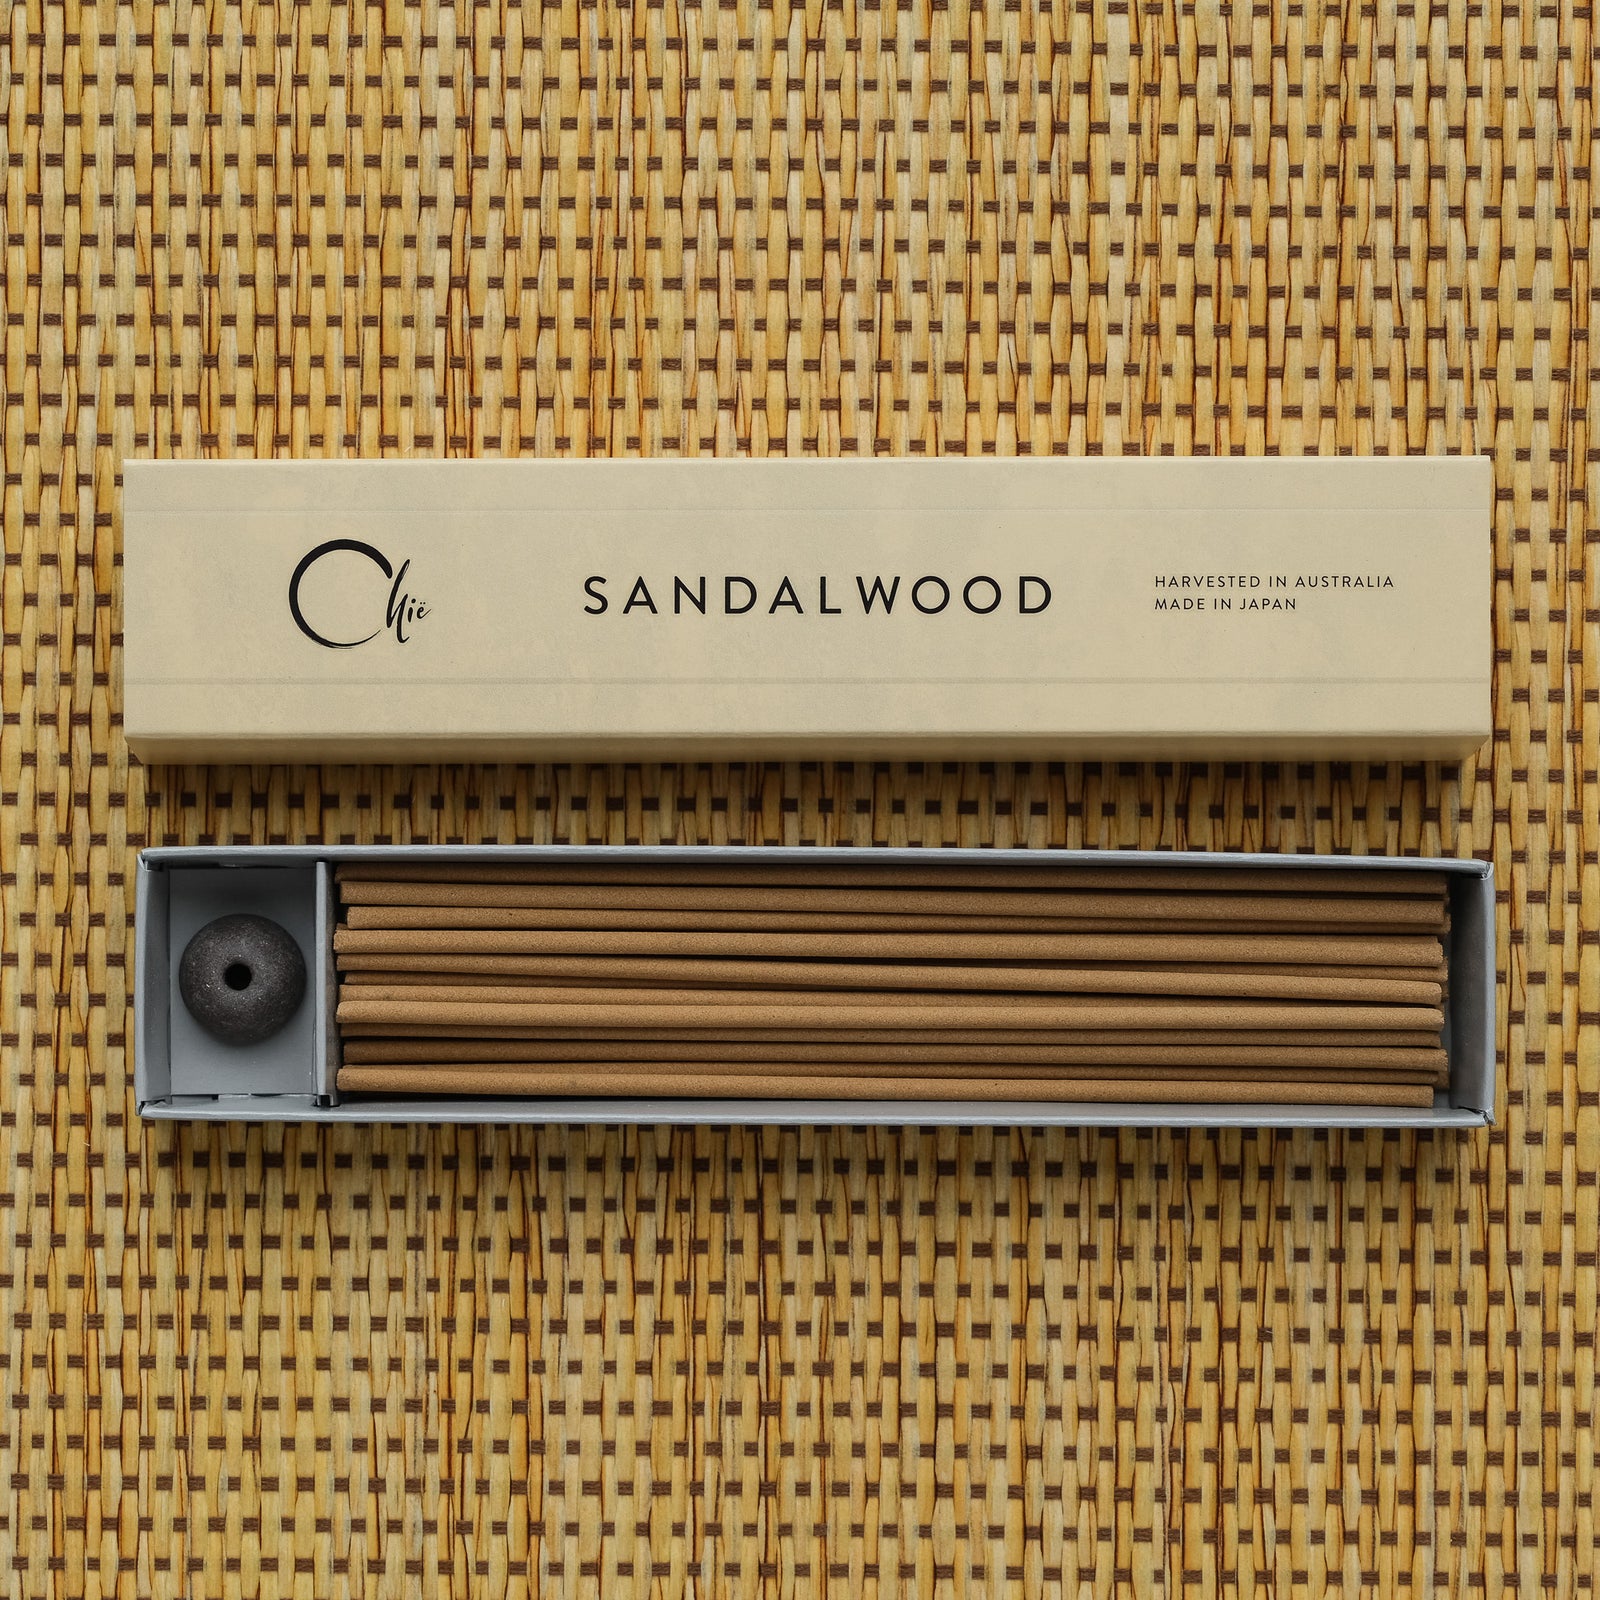 Chie Sandalwood Natural Incense